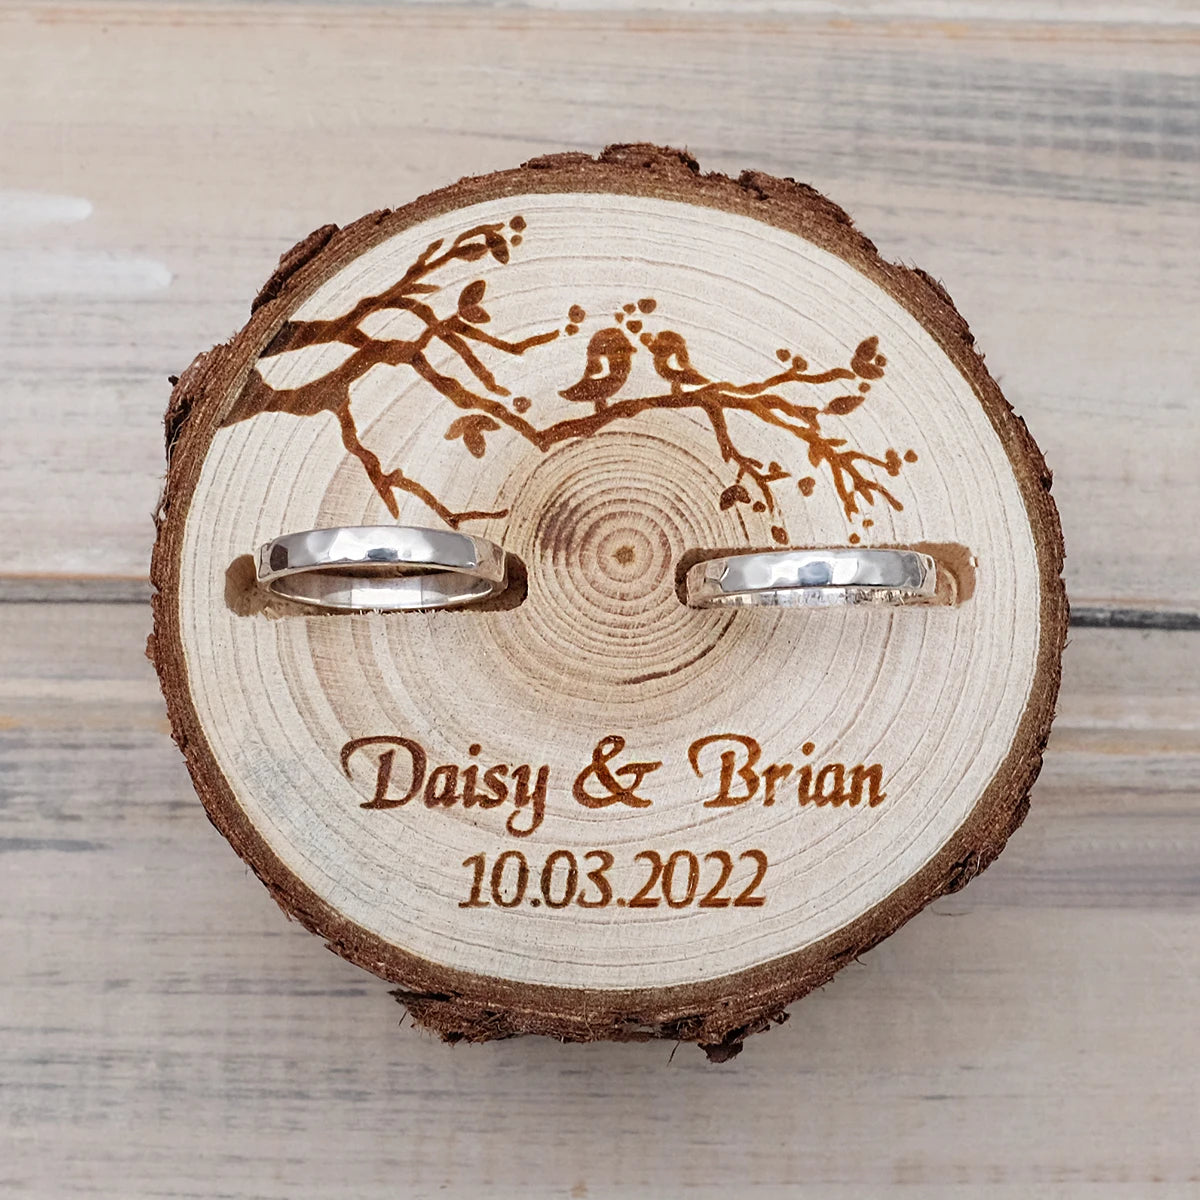 Presoanlised wedding Ring box for 2 or 3 rings, wooden wedding ring box •  rustic ring bearer box • real flowers in resin luxury ring box